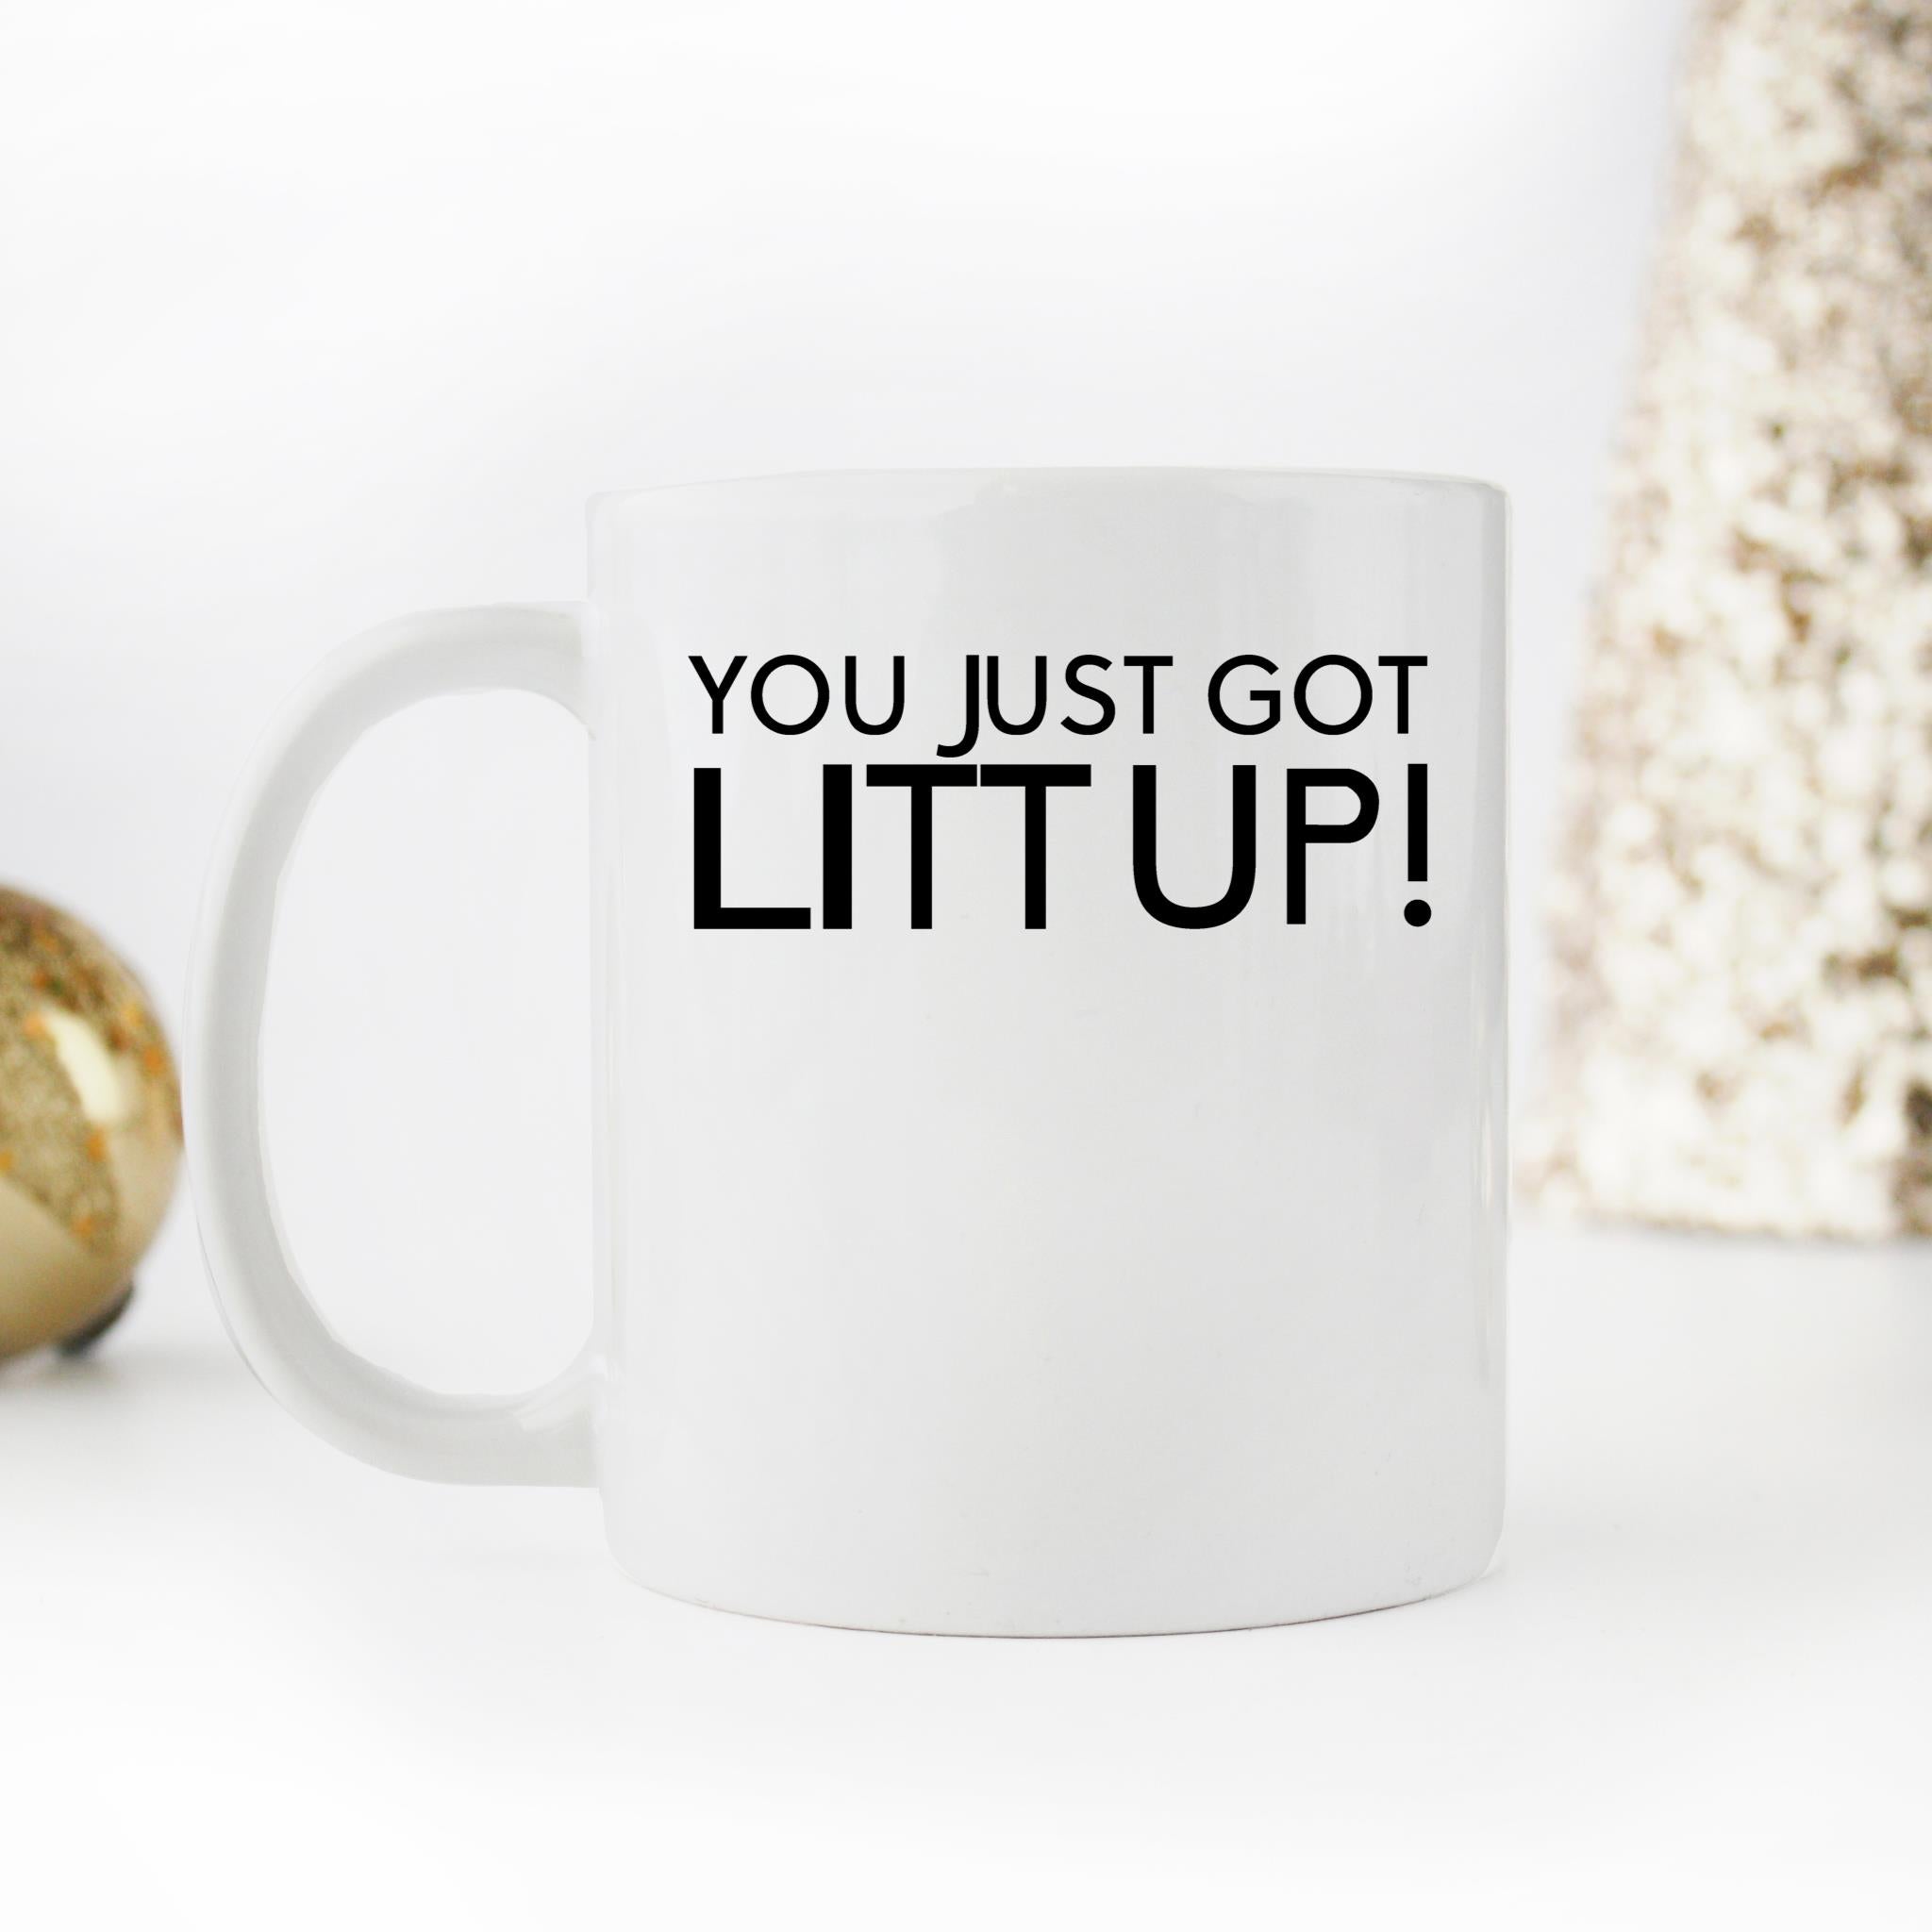 Skitongifts Funny Ceramic Novelty Coffee Mug You Just Got Litt Up mPbHHmo